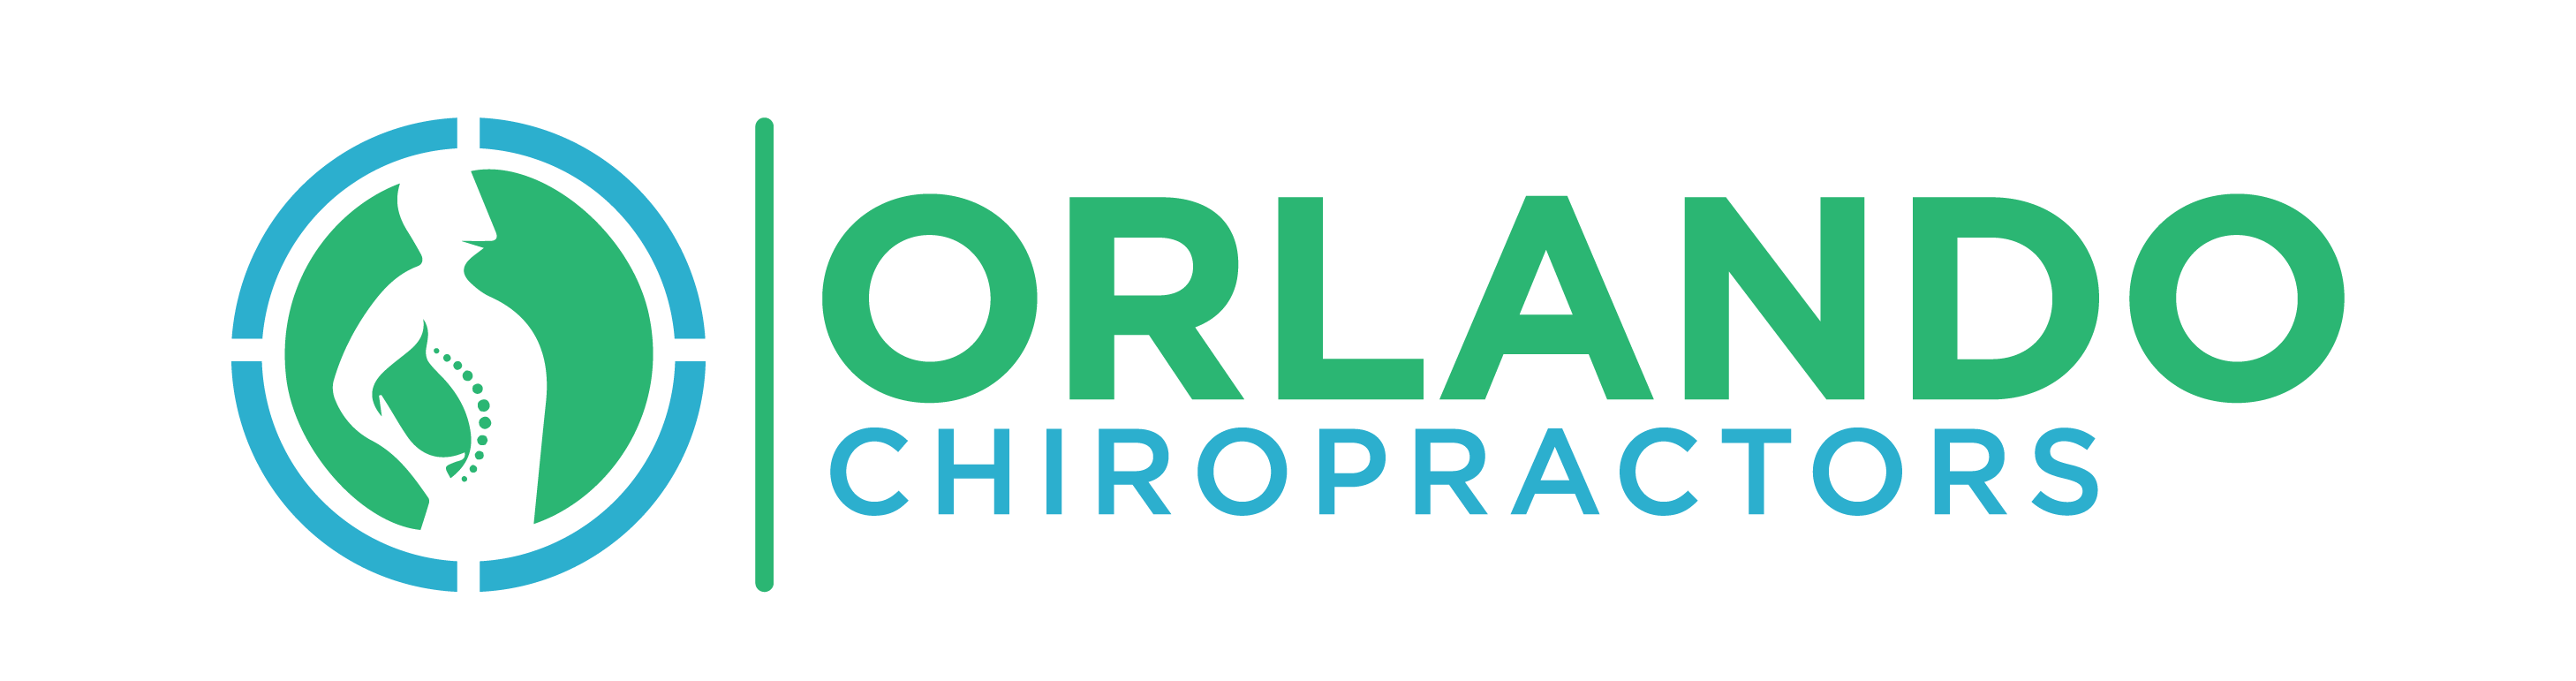 Orlando Chiropractors